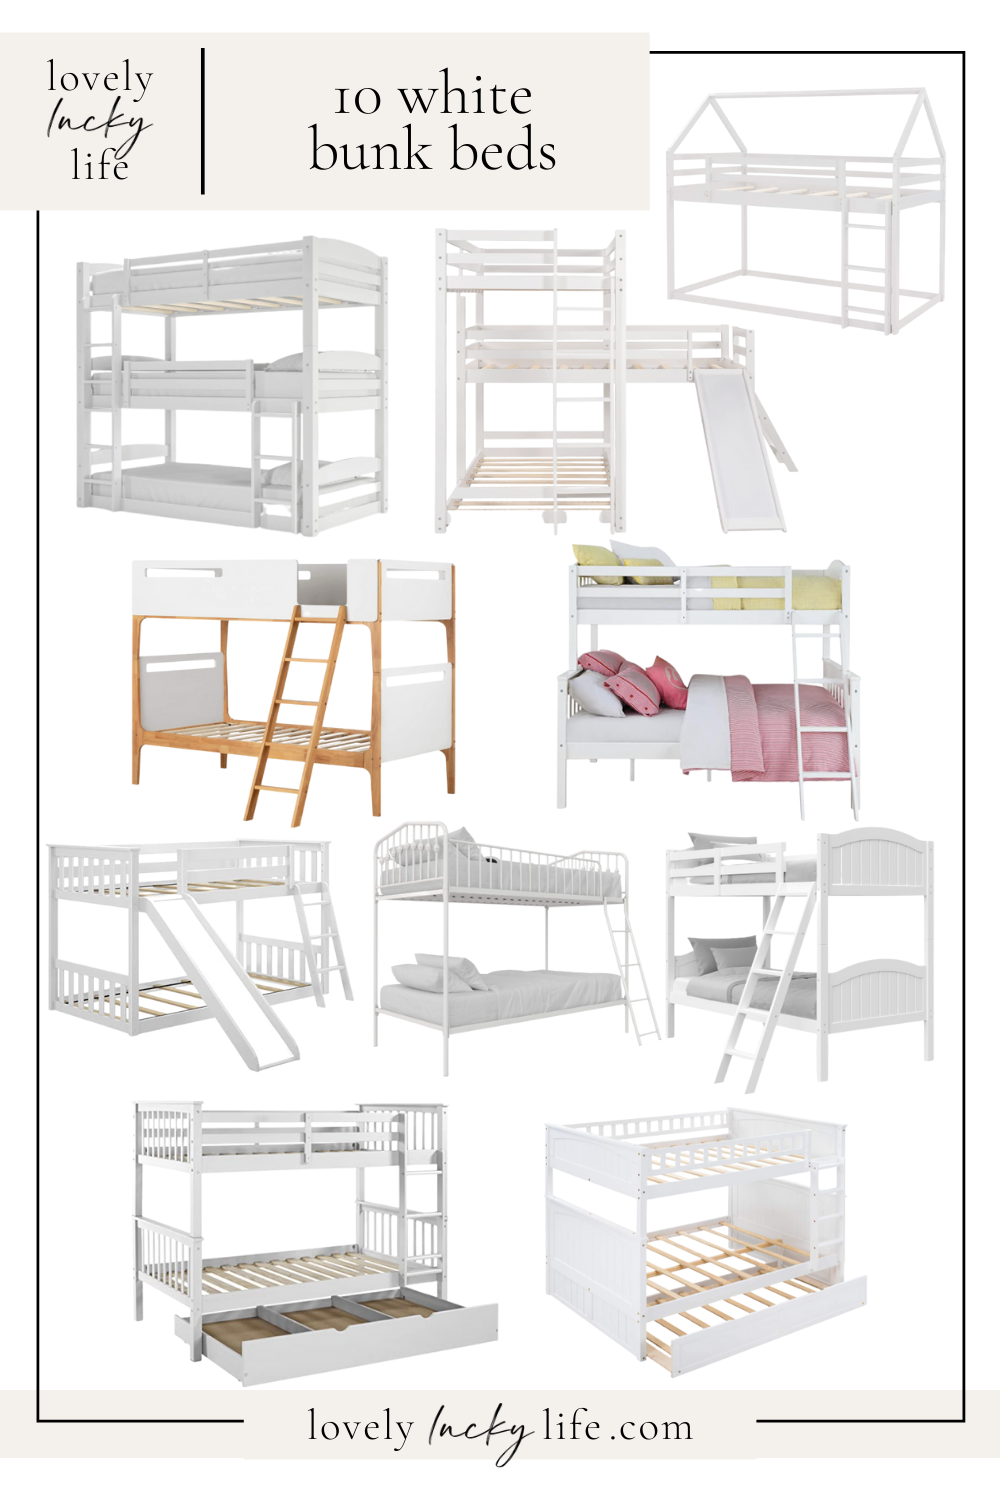 10 white bunk beds on LovelyLuckyLife.com